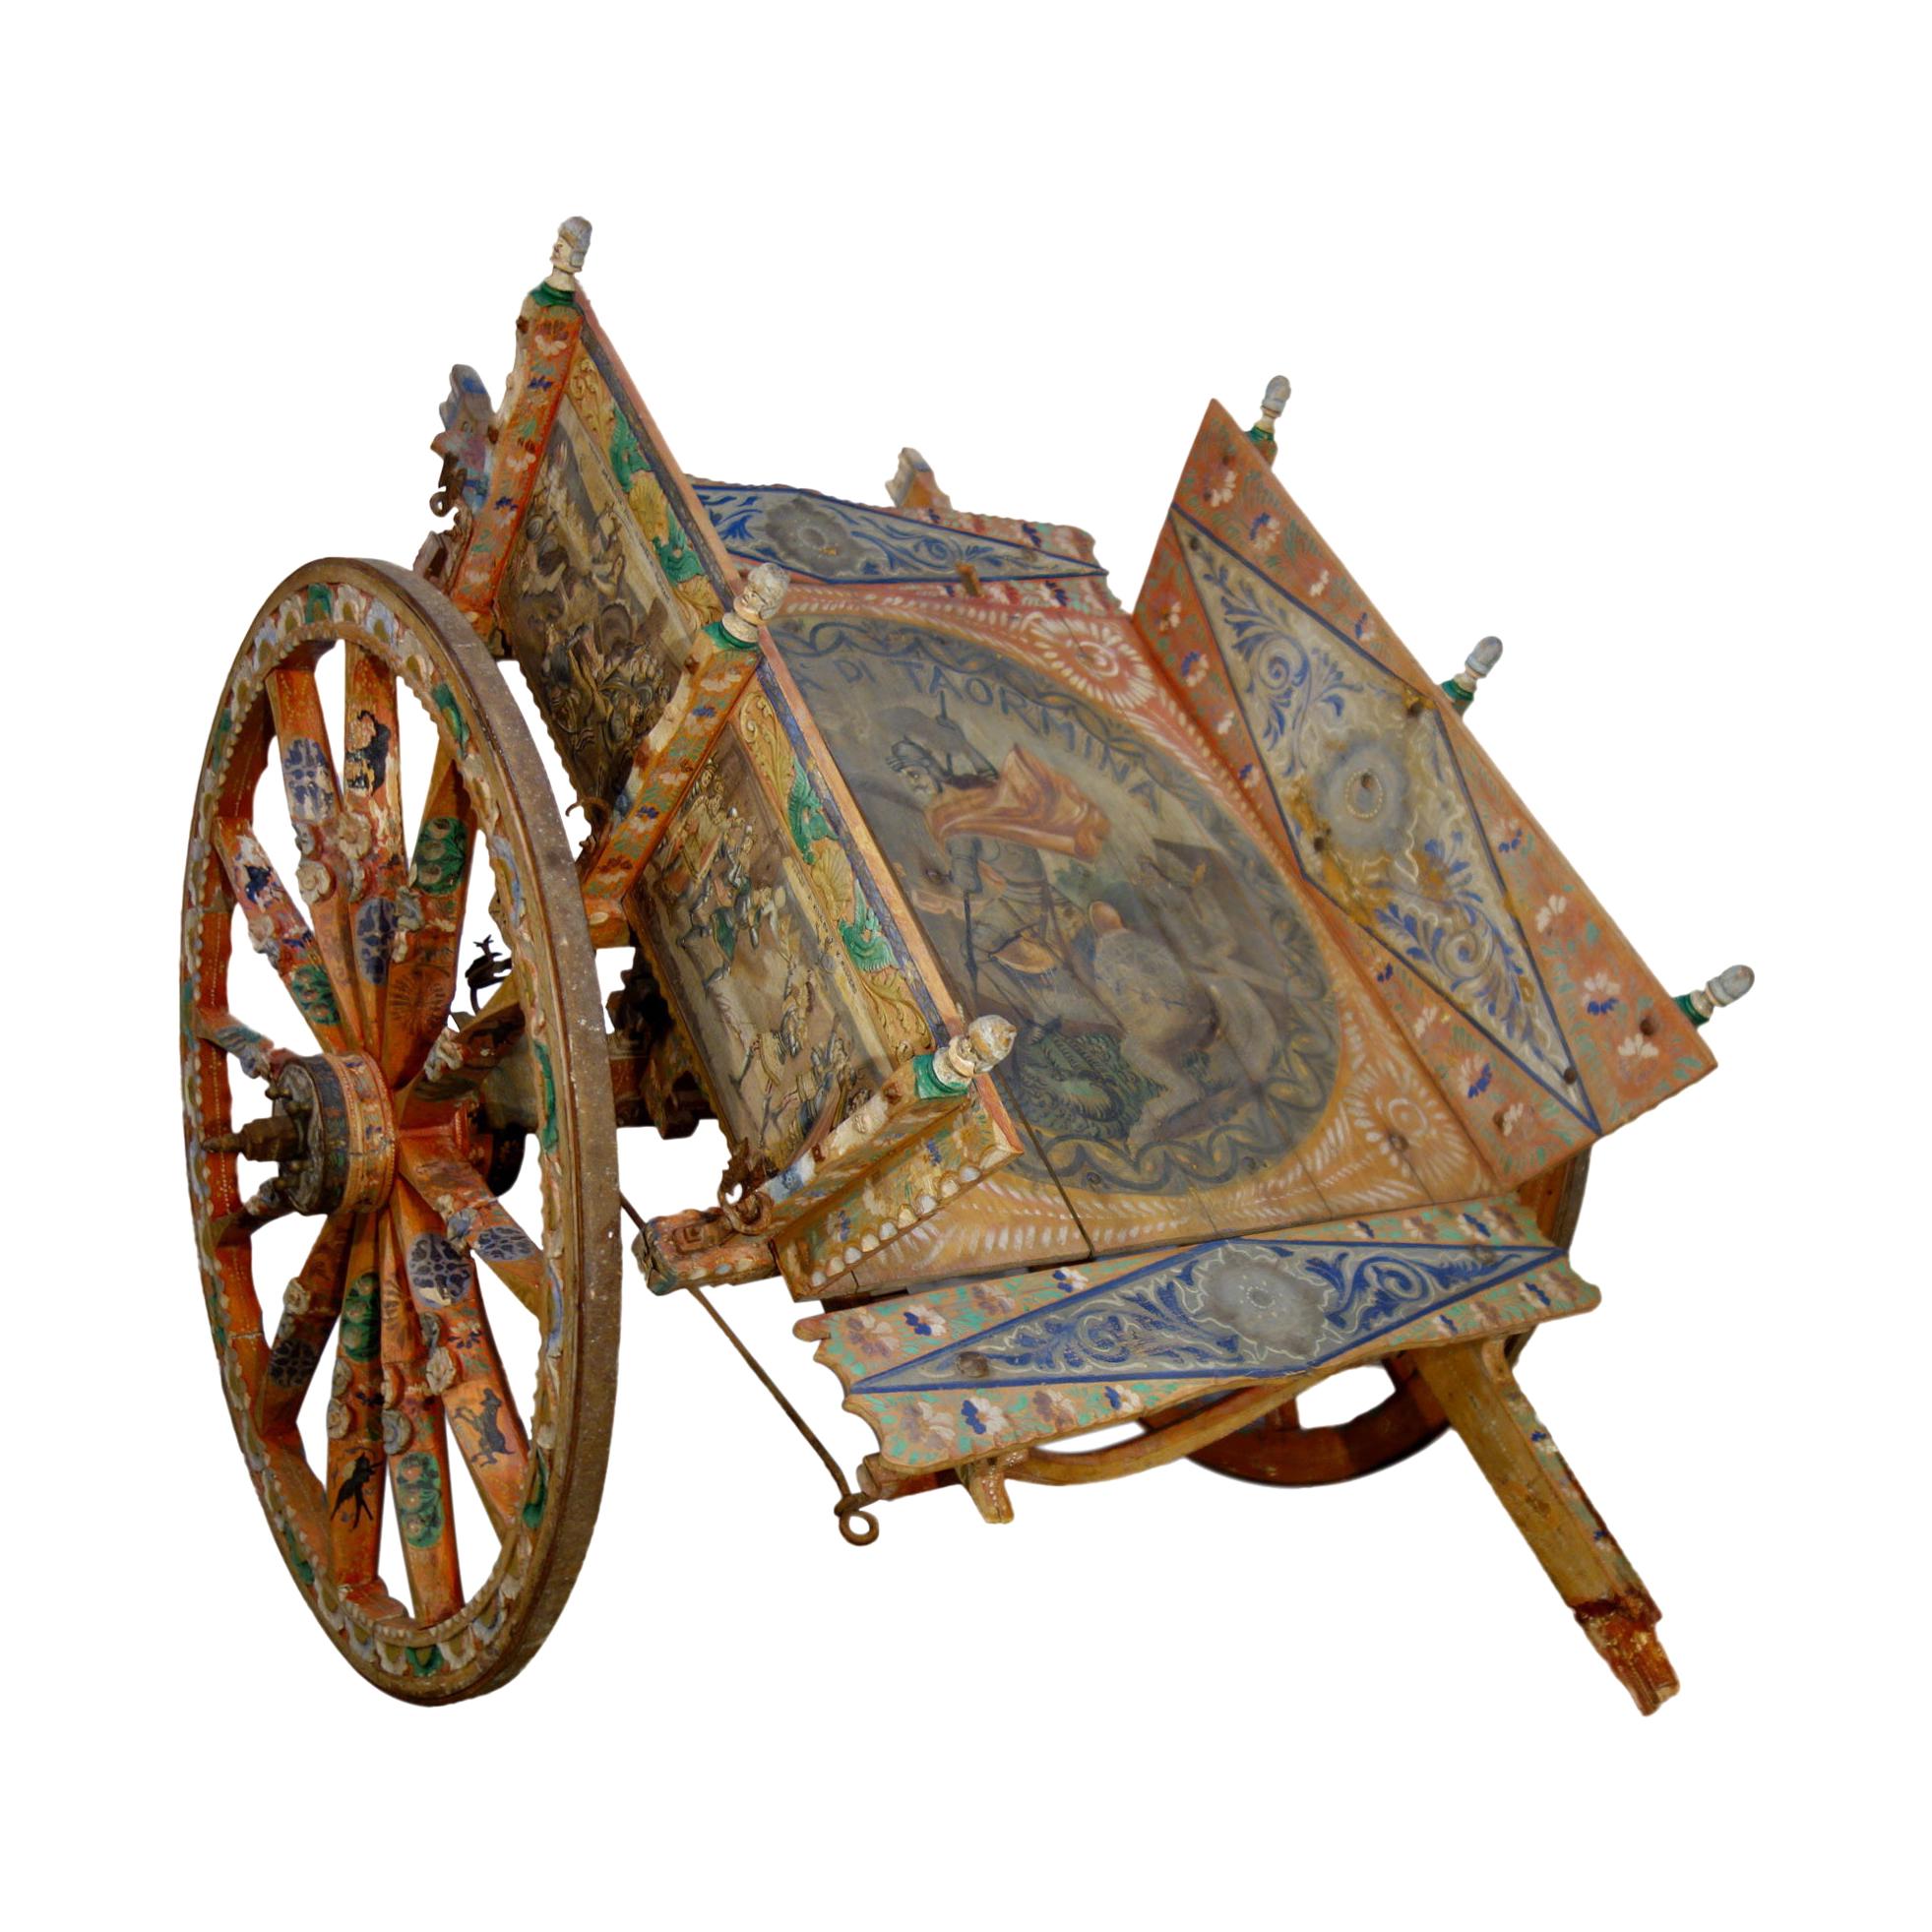 19th Century Italian Hand Painted Carretto Sicilian Cart, Cultural Art Form